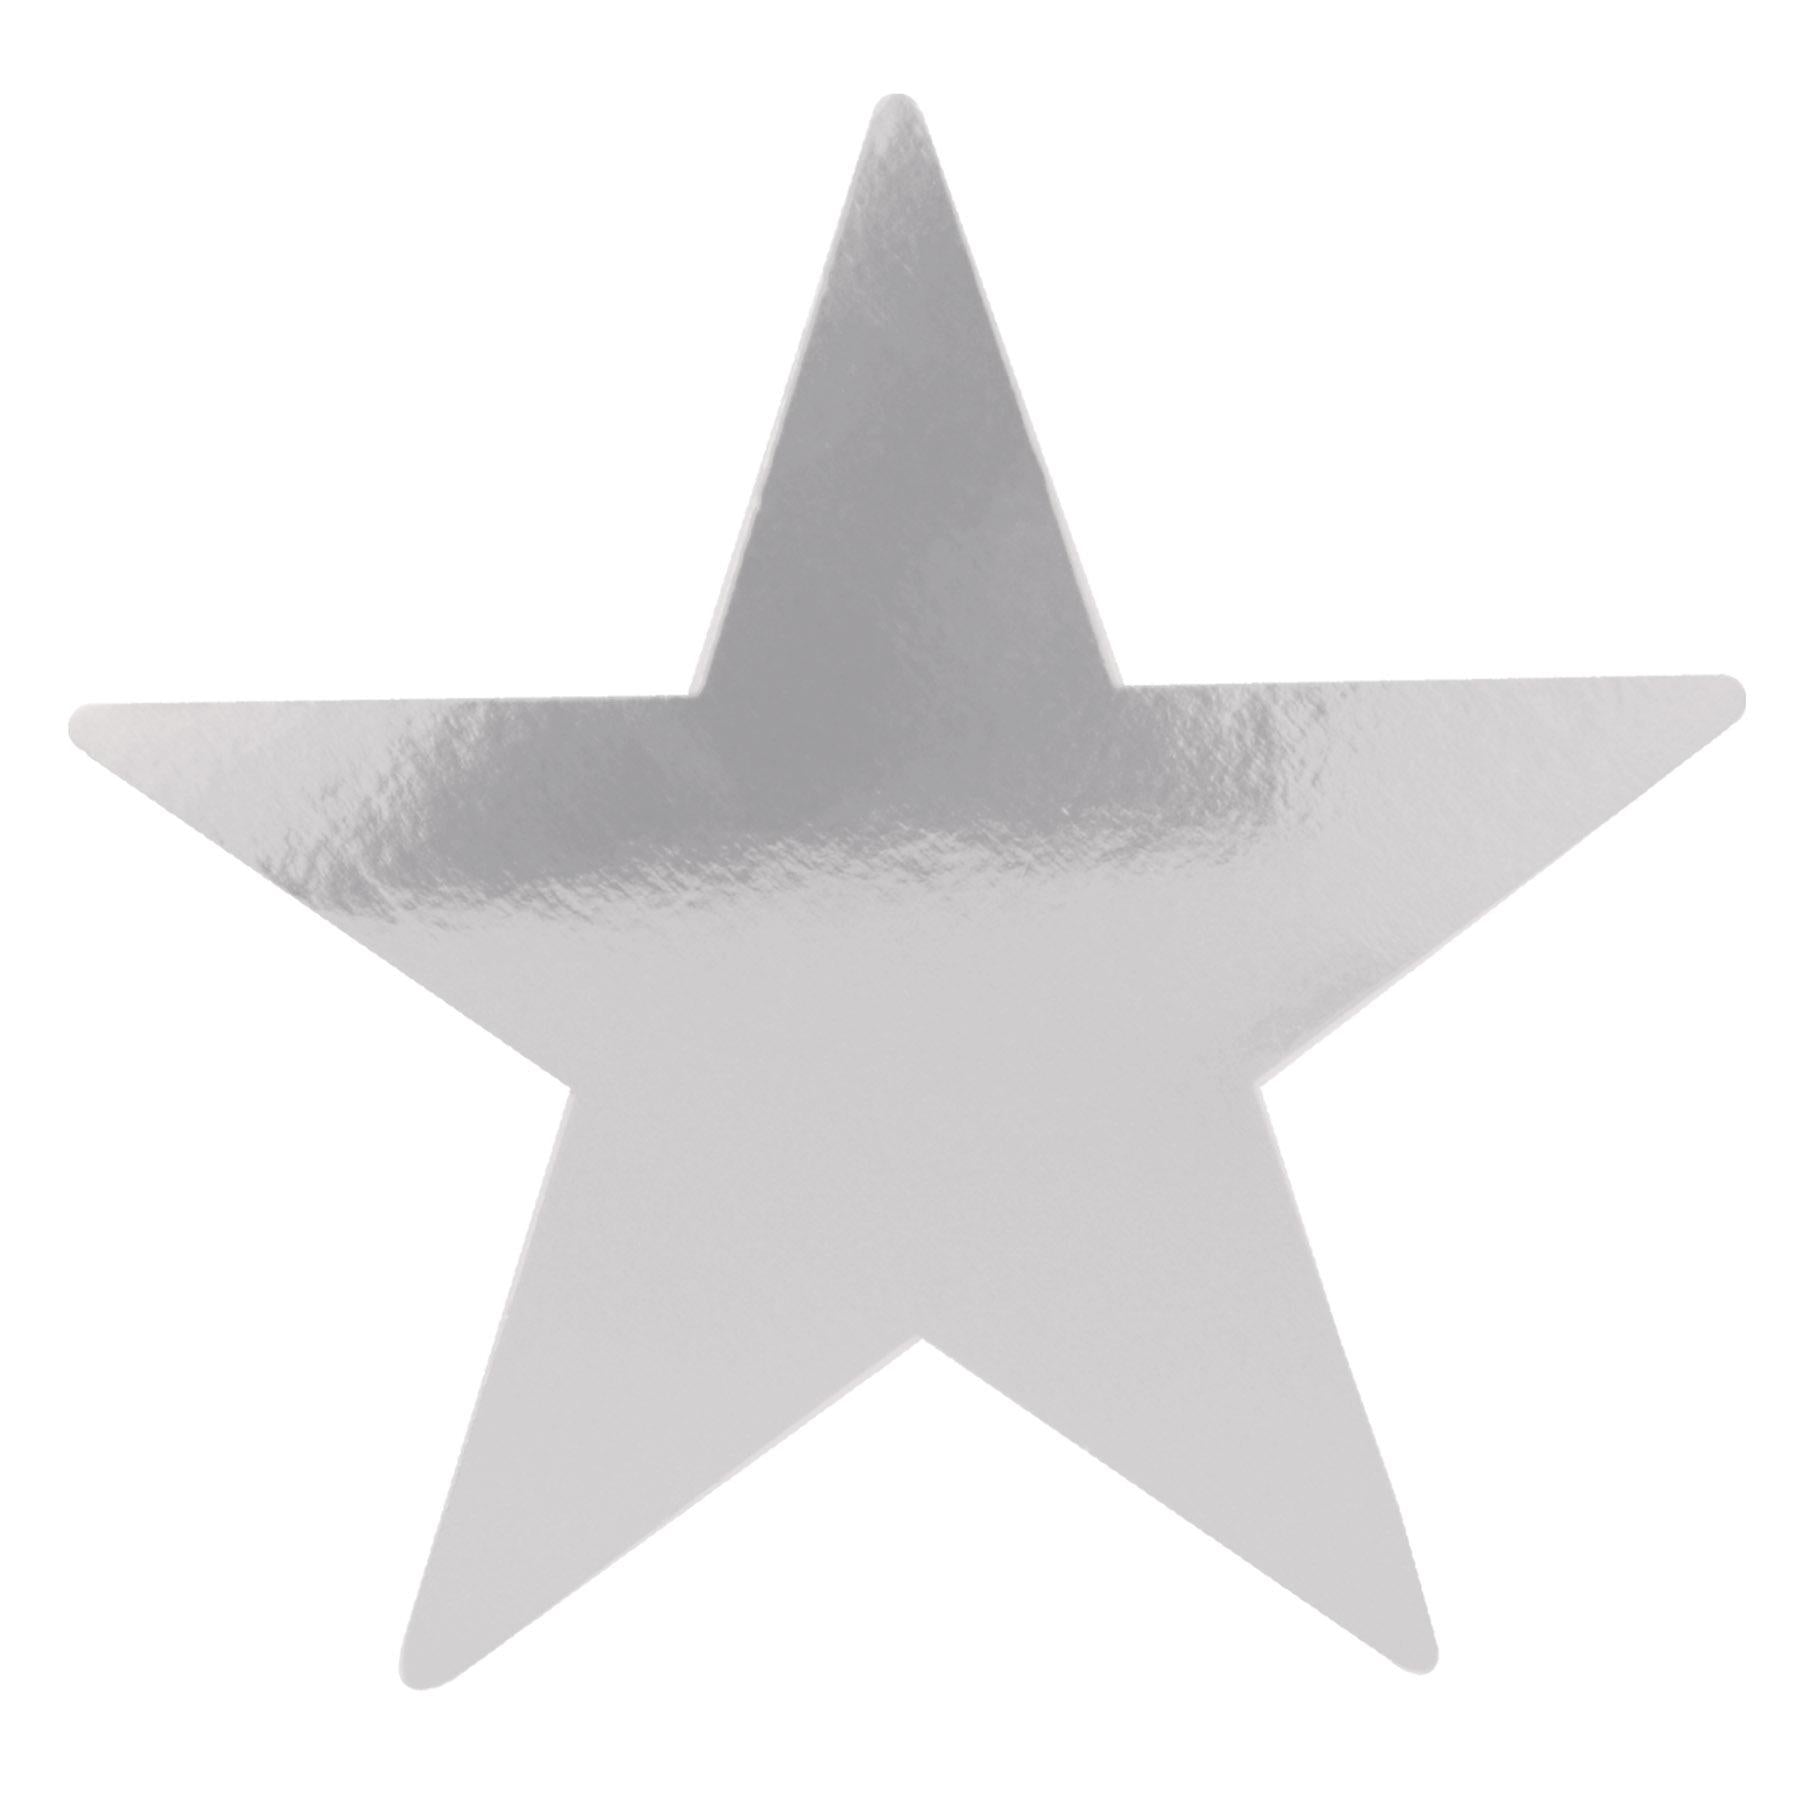 9" Beistle Foil Star Cutout - Silver